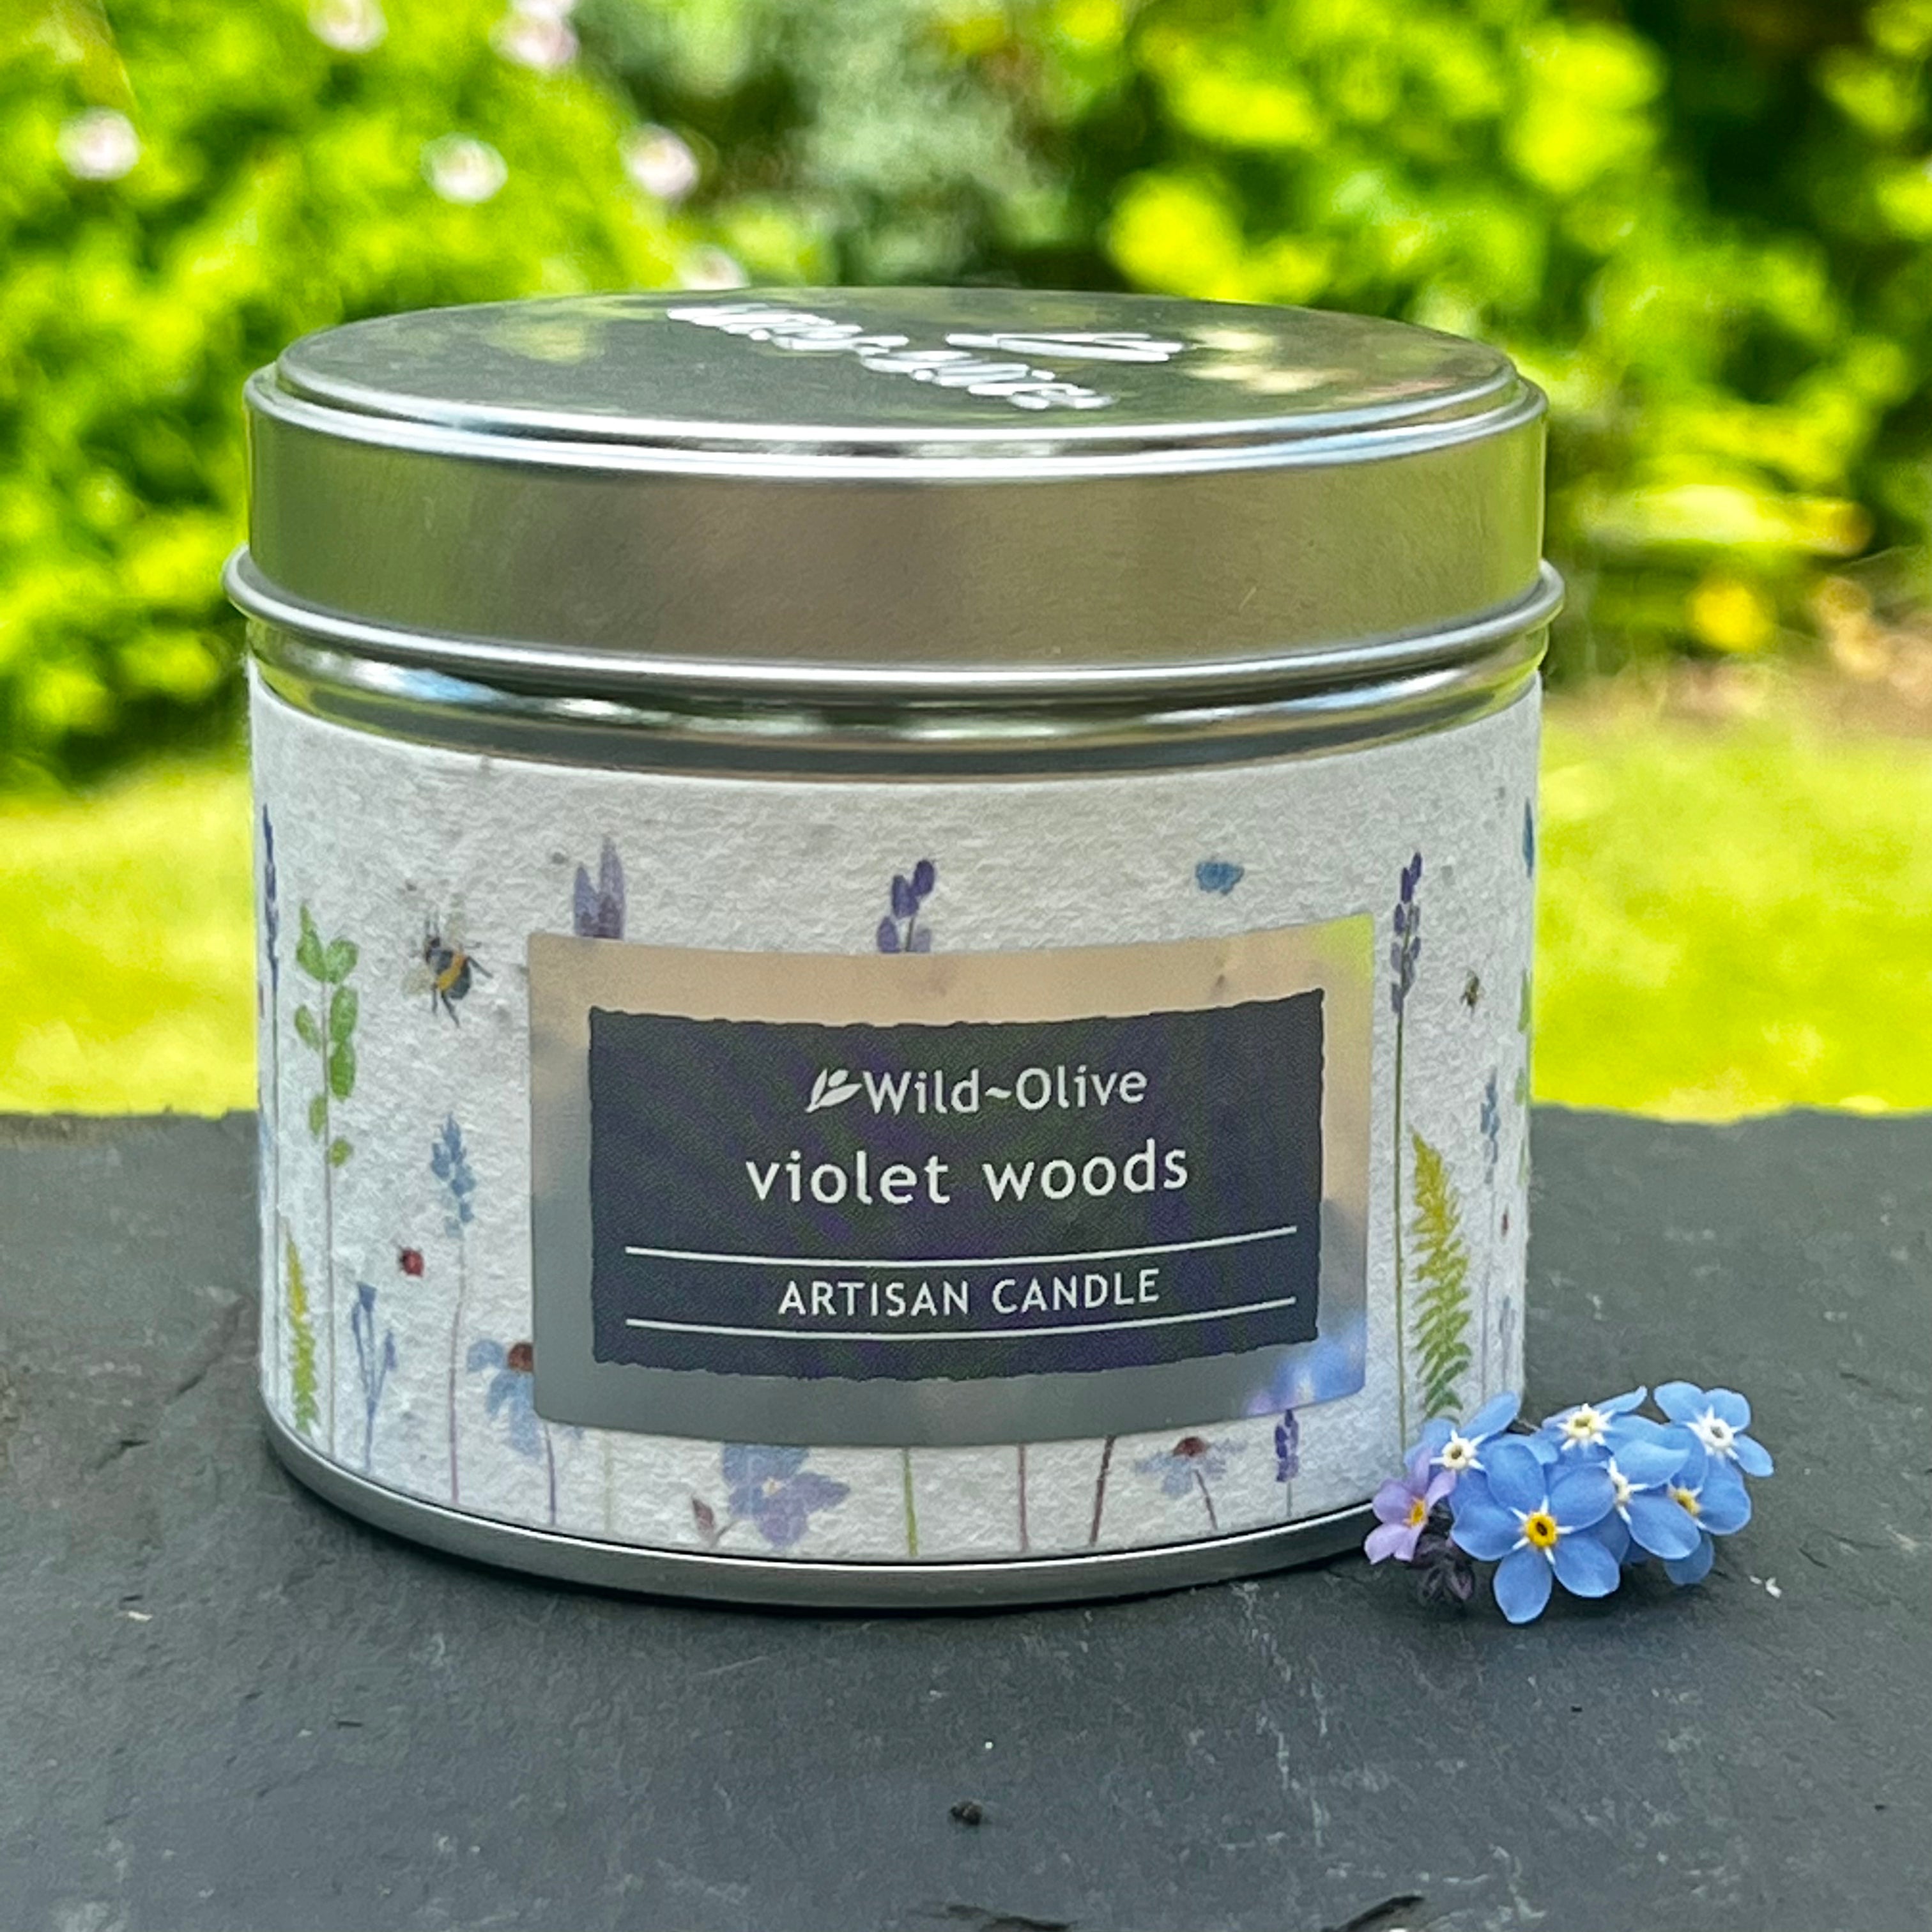 Wild Olive Violet Woods Artisan Candle